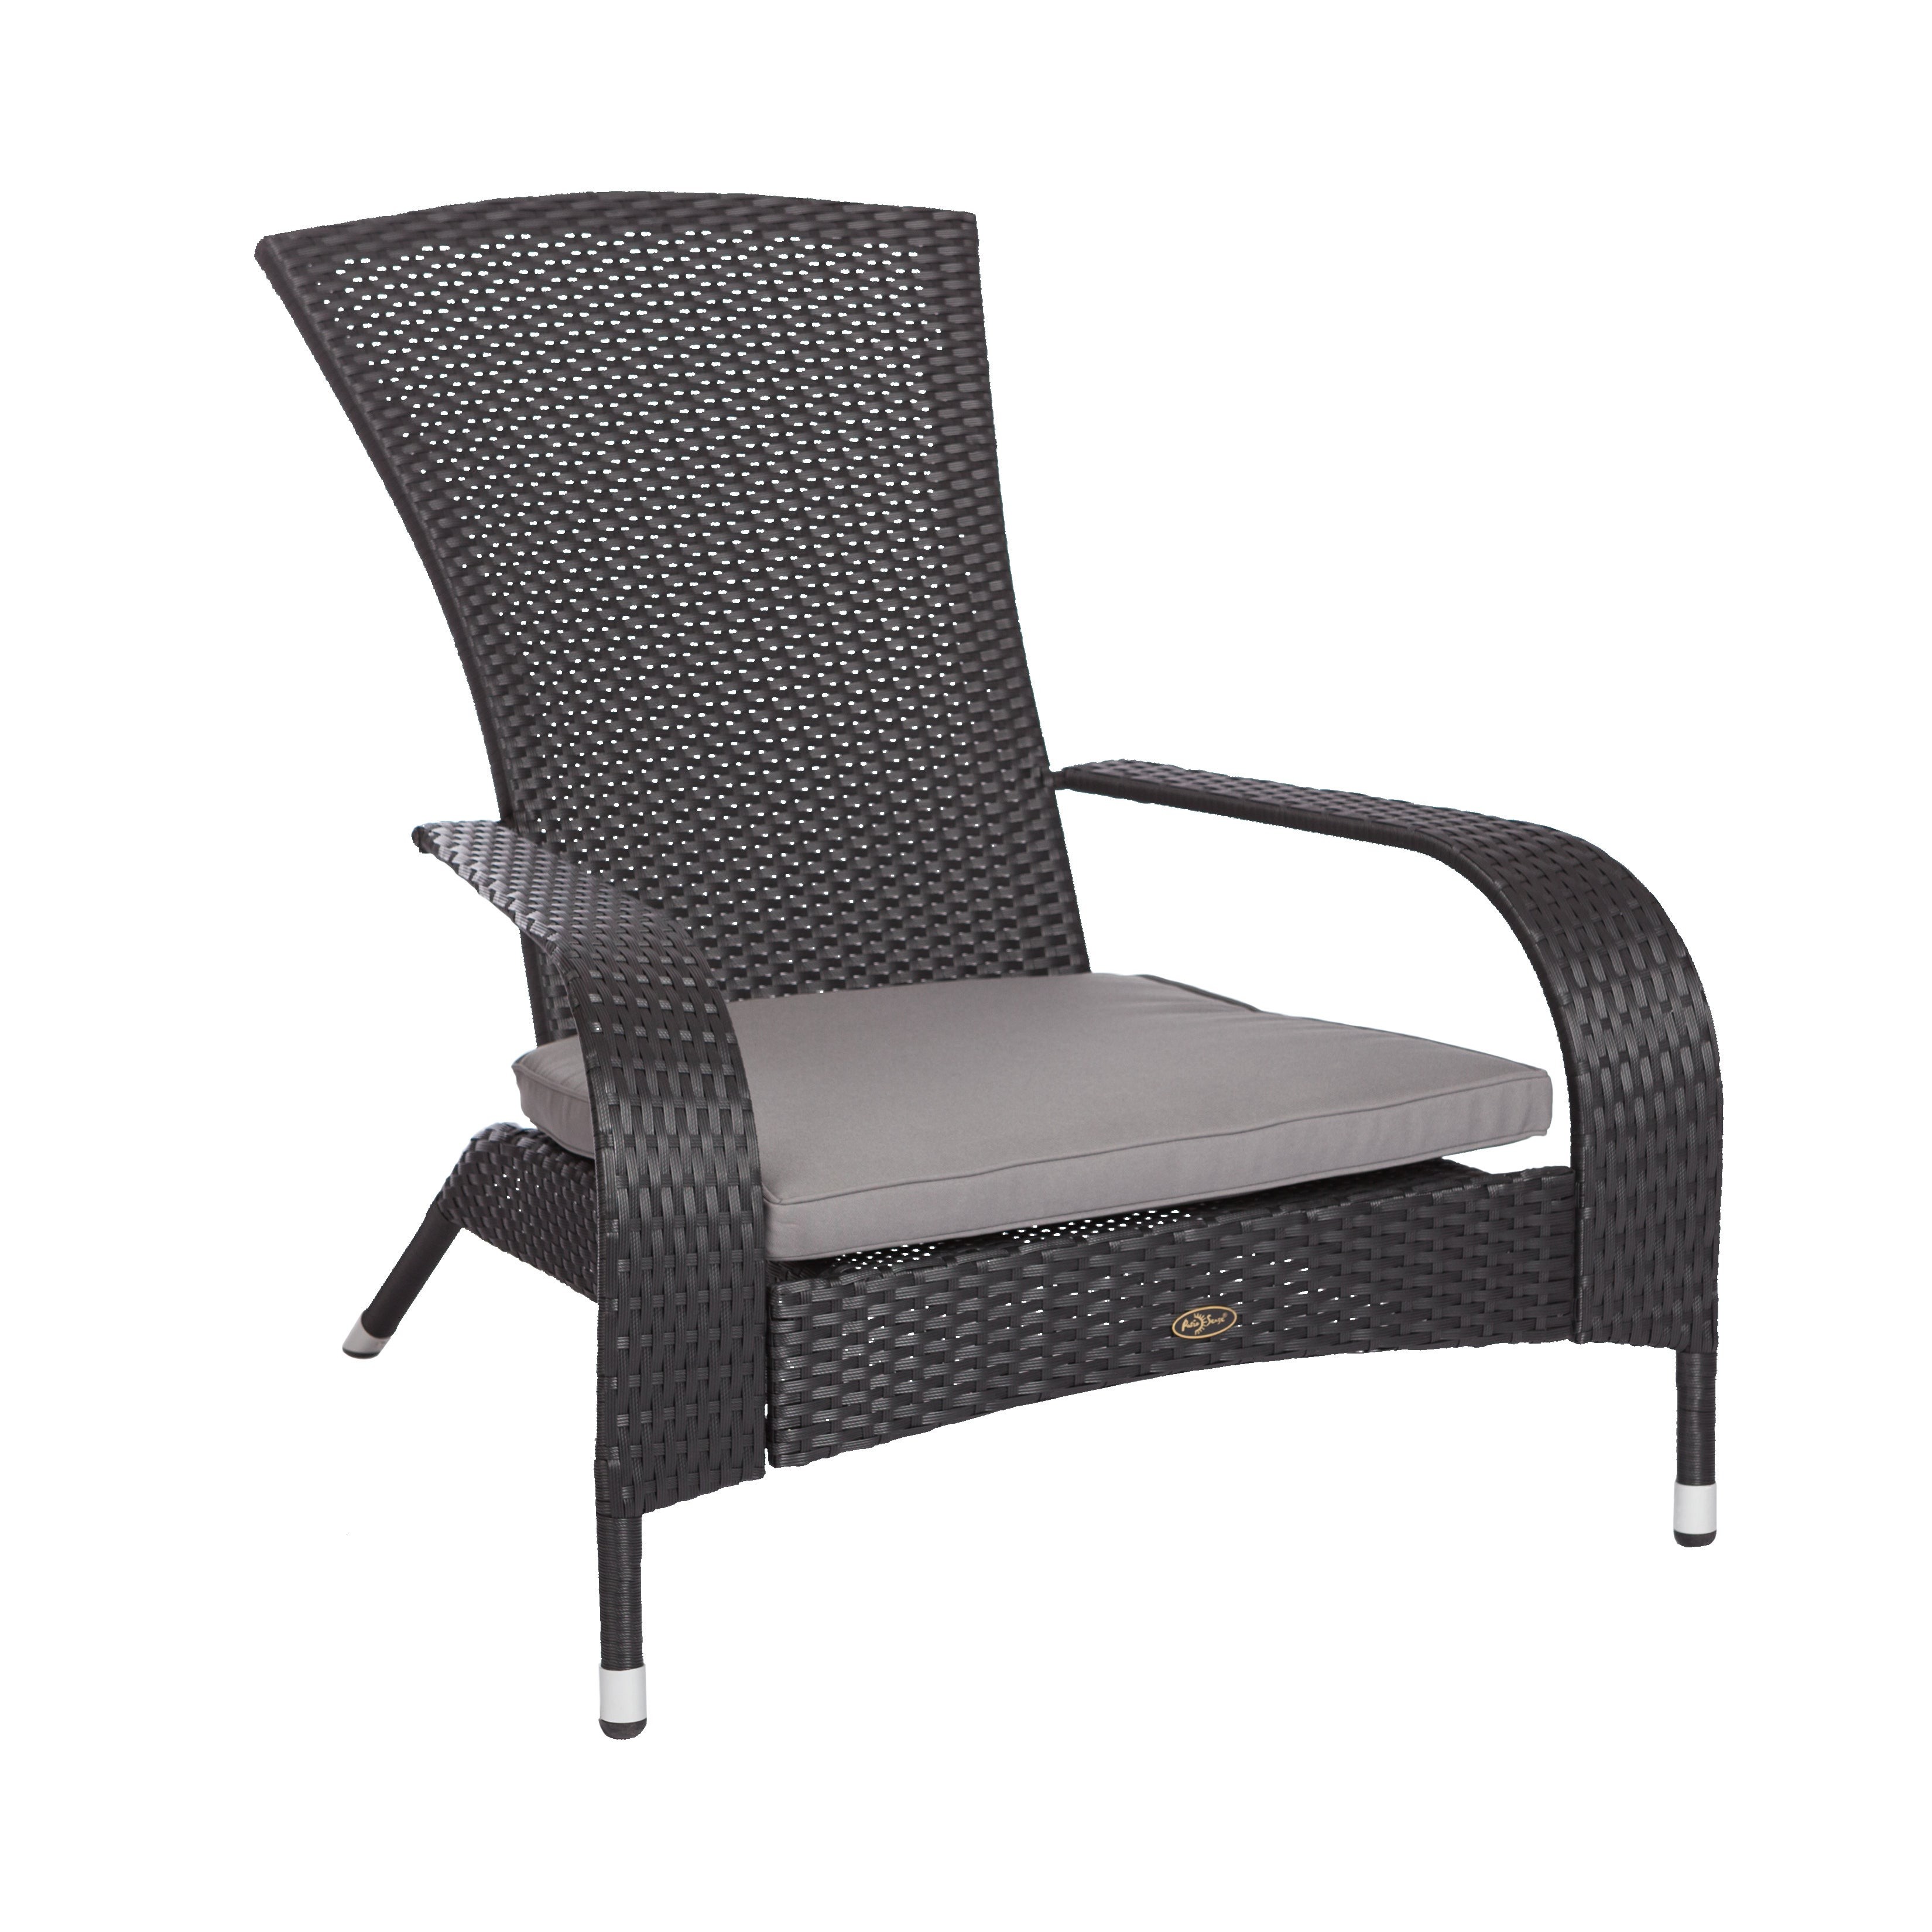 Coconino Wicker Adirondack Chair Black